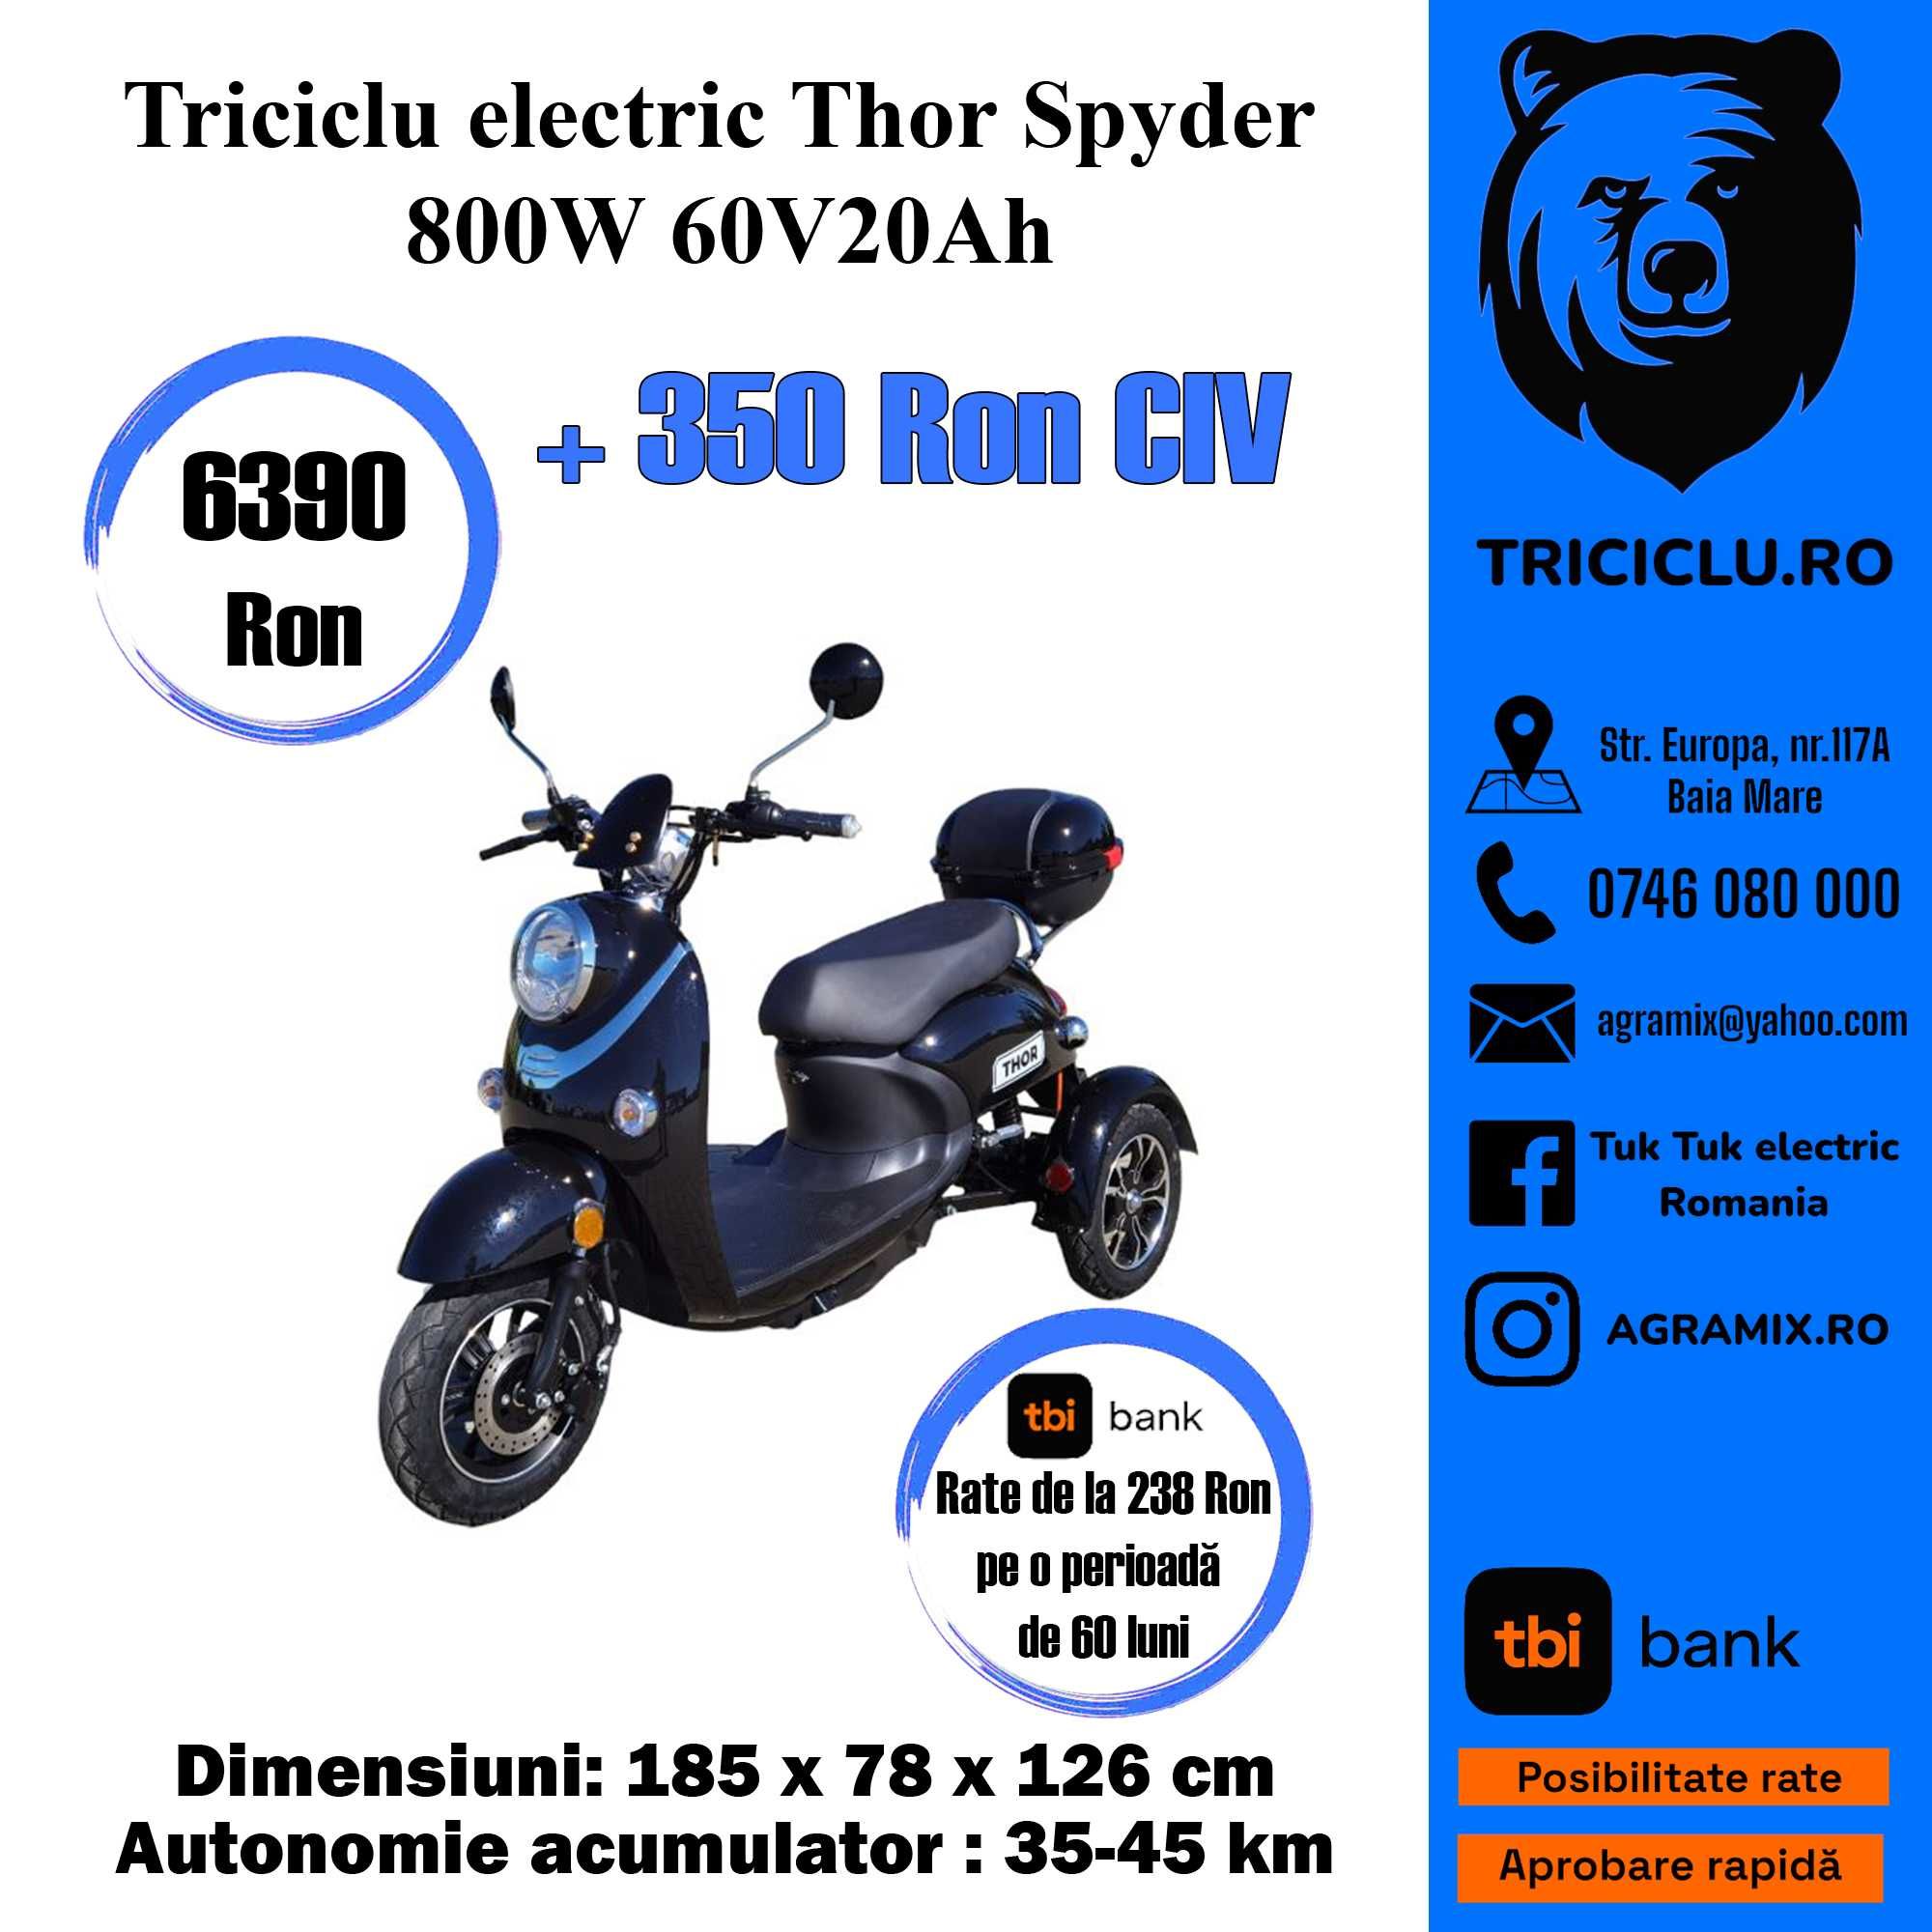 Triciclu electric Thor Spyder 800W 60V20Ah Agramix